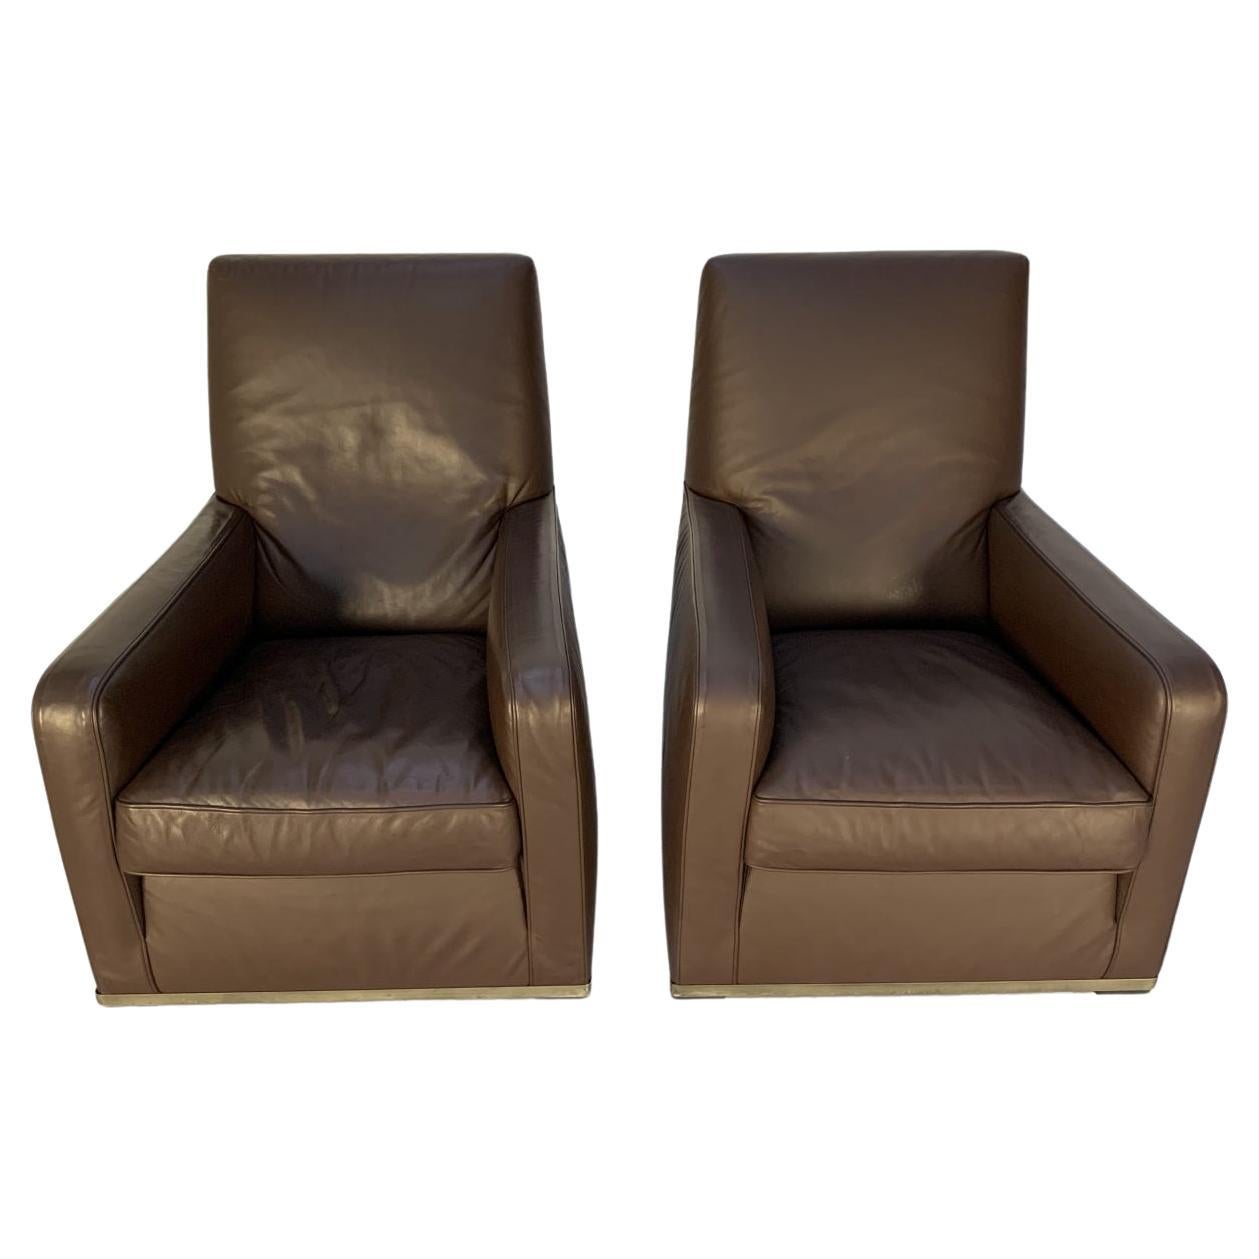 Paire de fauteuils Imprimatur Apta de B&B Italia - en cuir Gamma brun foncé